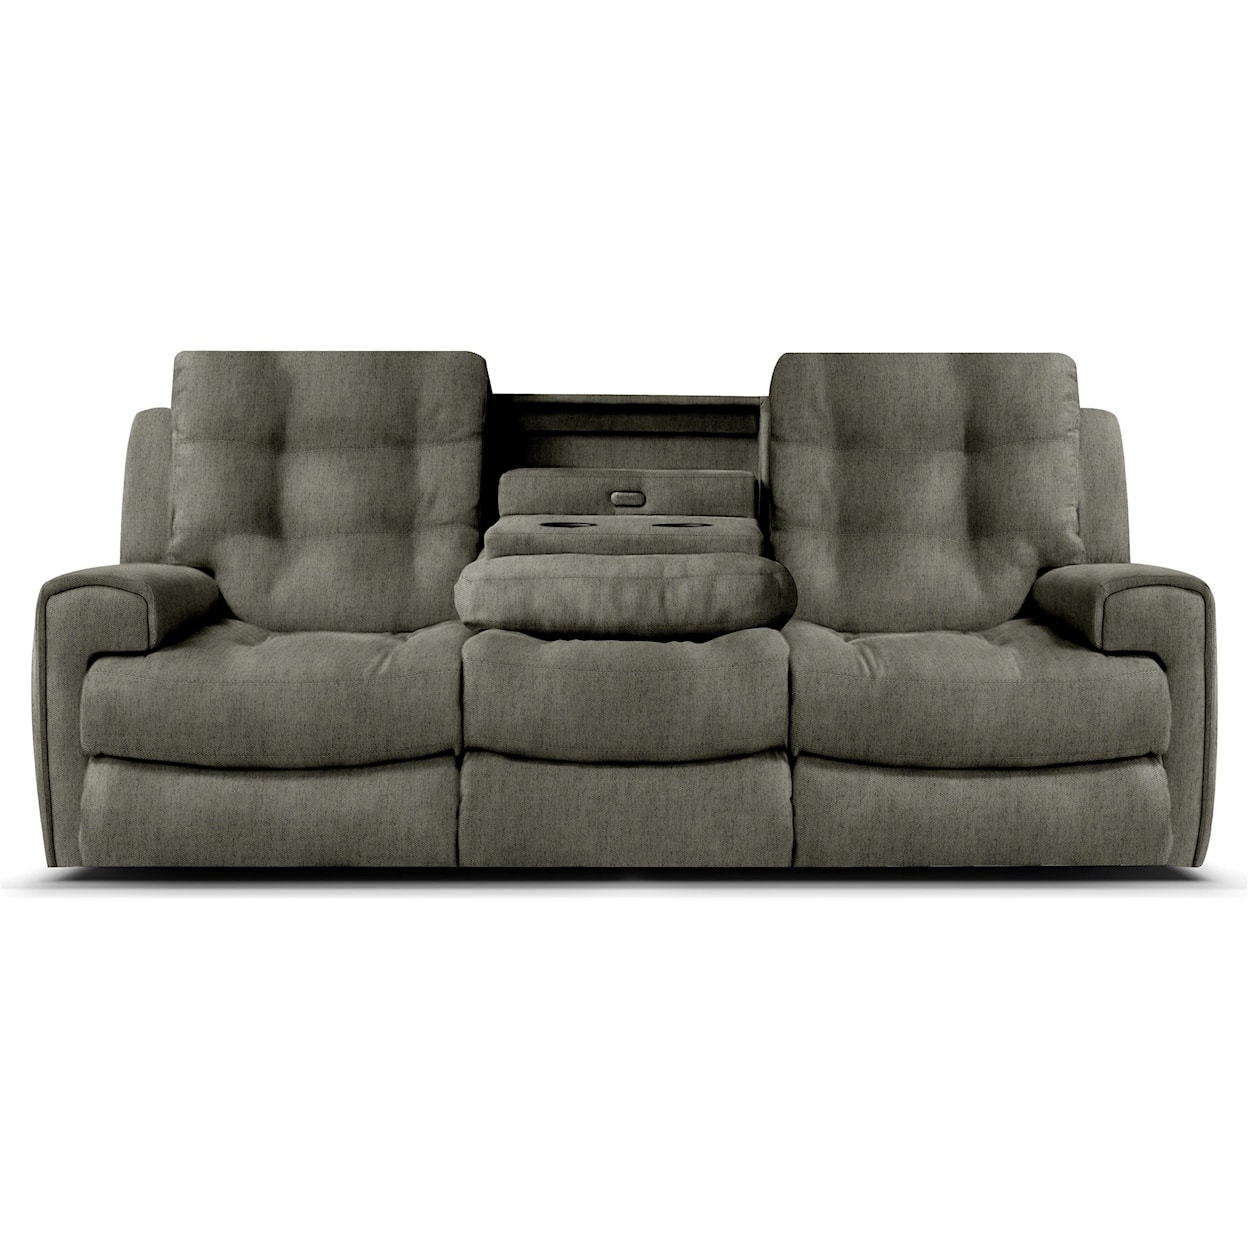 England EZ1900/H Series Double Reclining Sofa